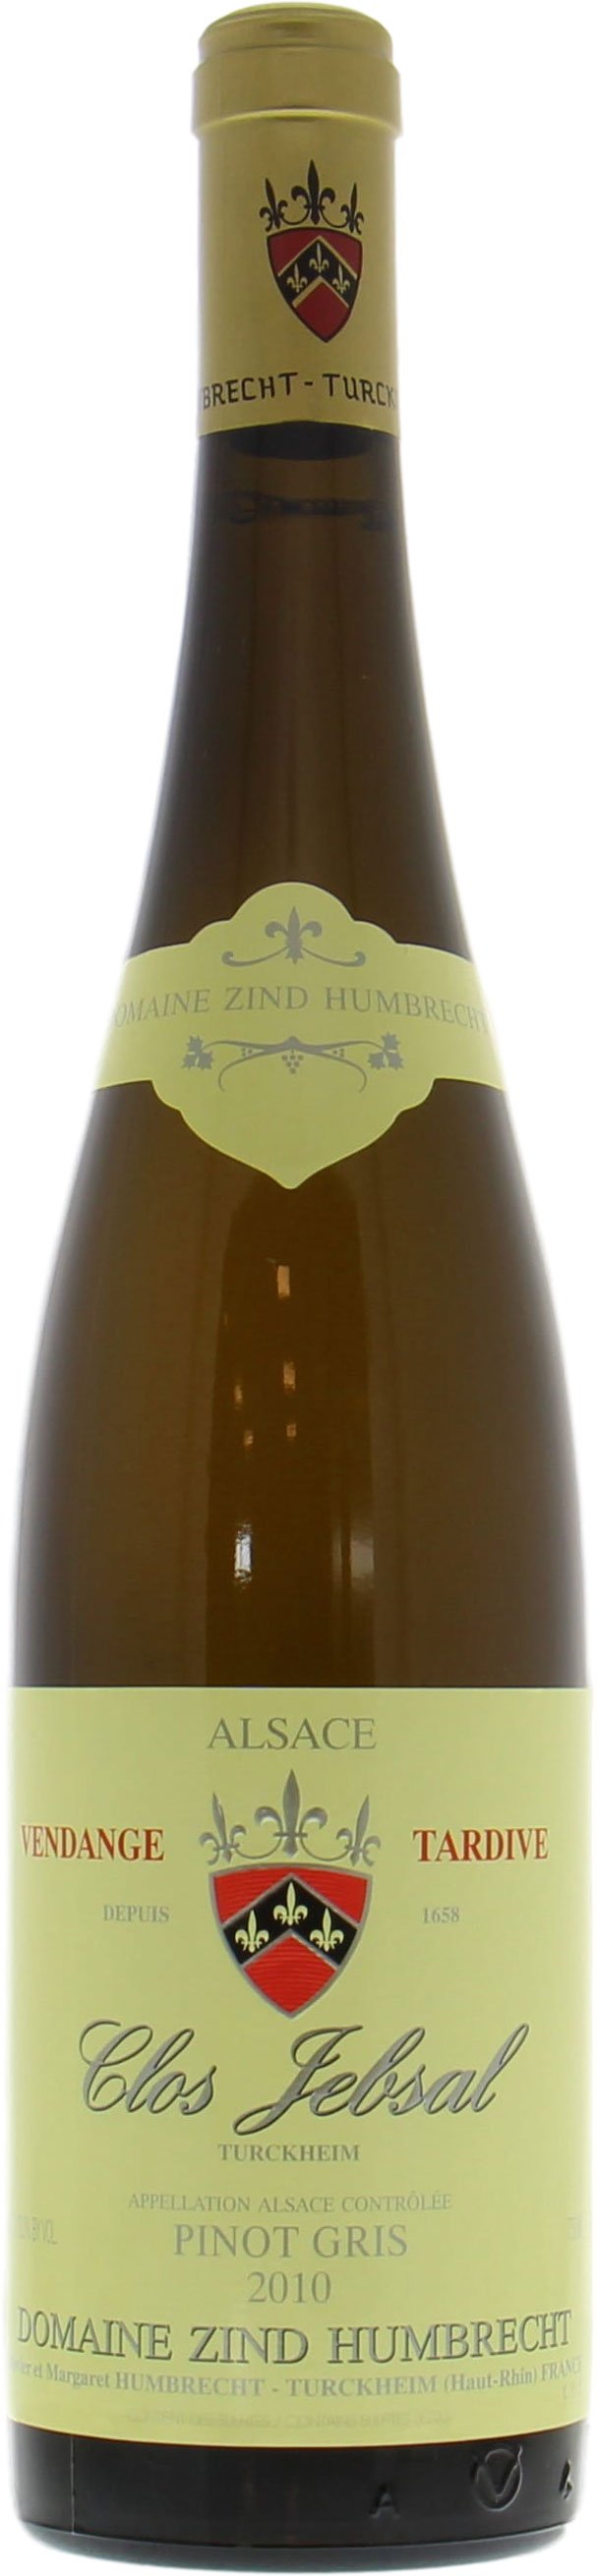 Zind Humbrecht - Pinot Gris Clos Jebsal Vendange Tardive 2010 Perfect